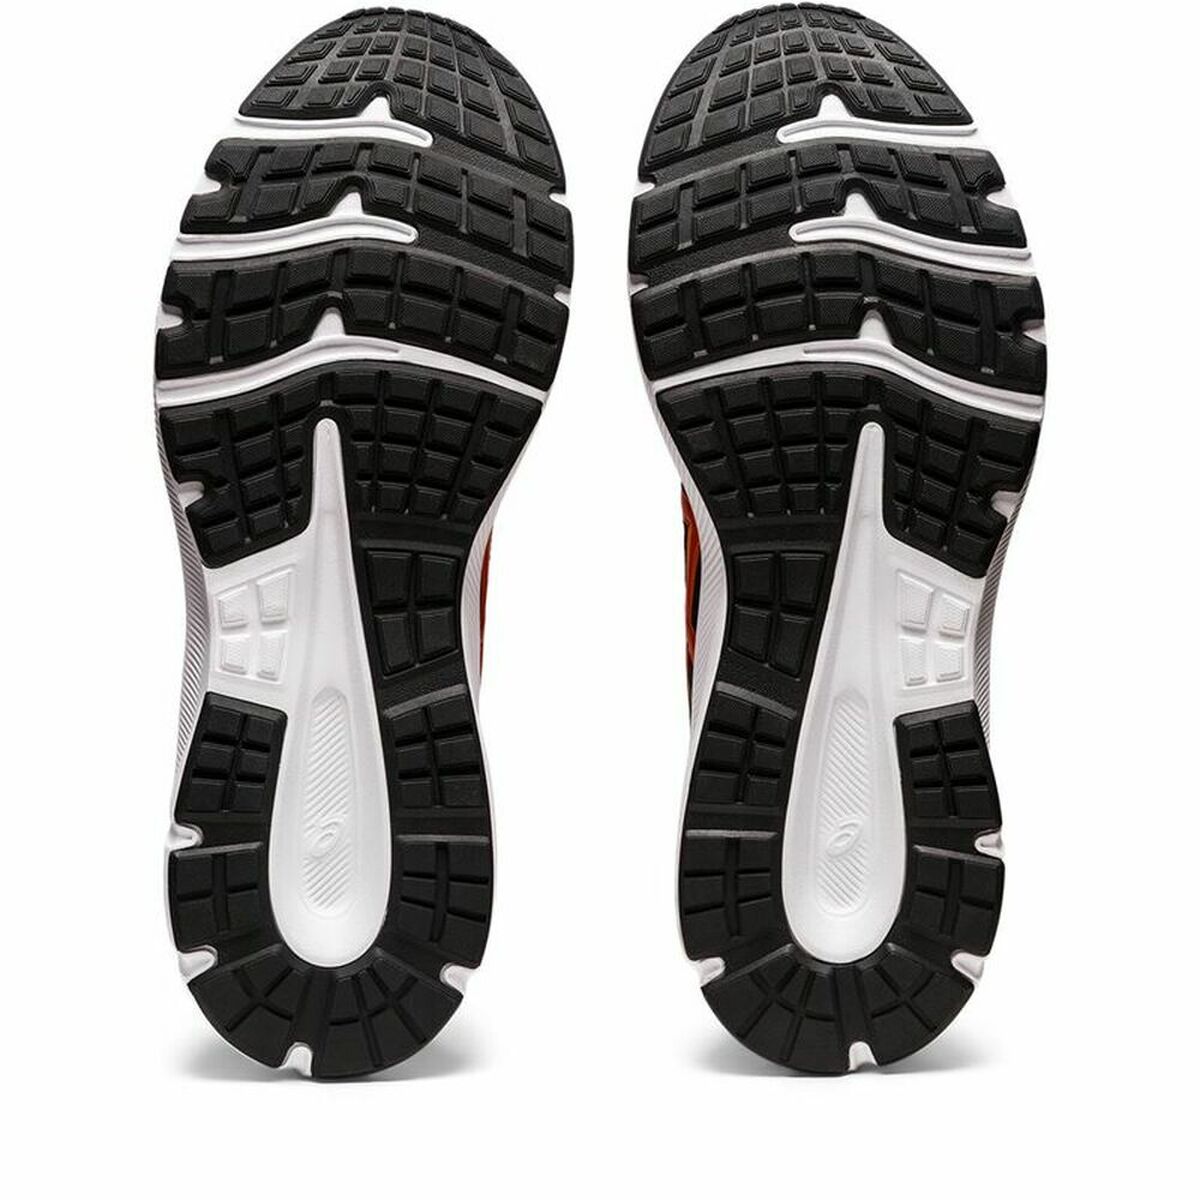 Running Shoes for Adults Asics Jolt 3 Black